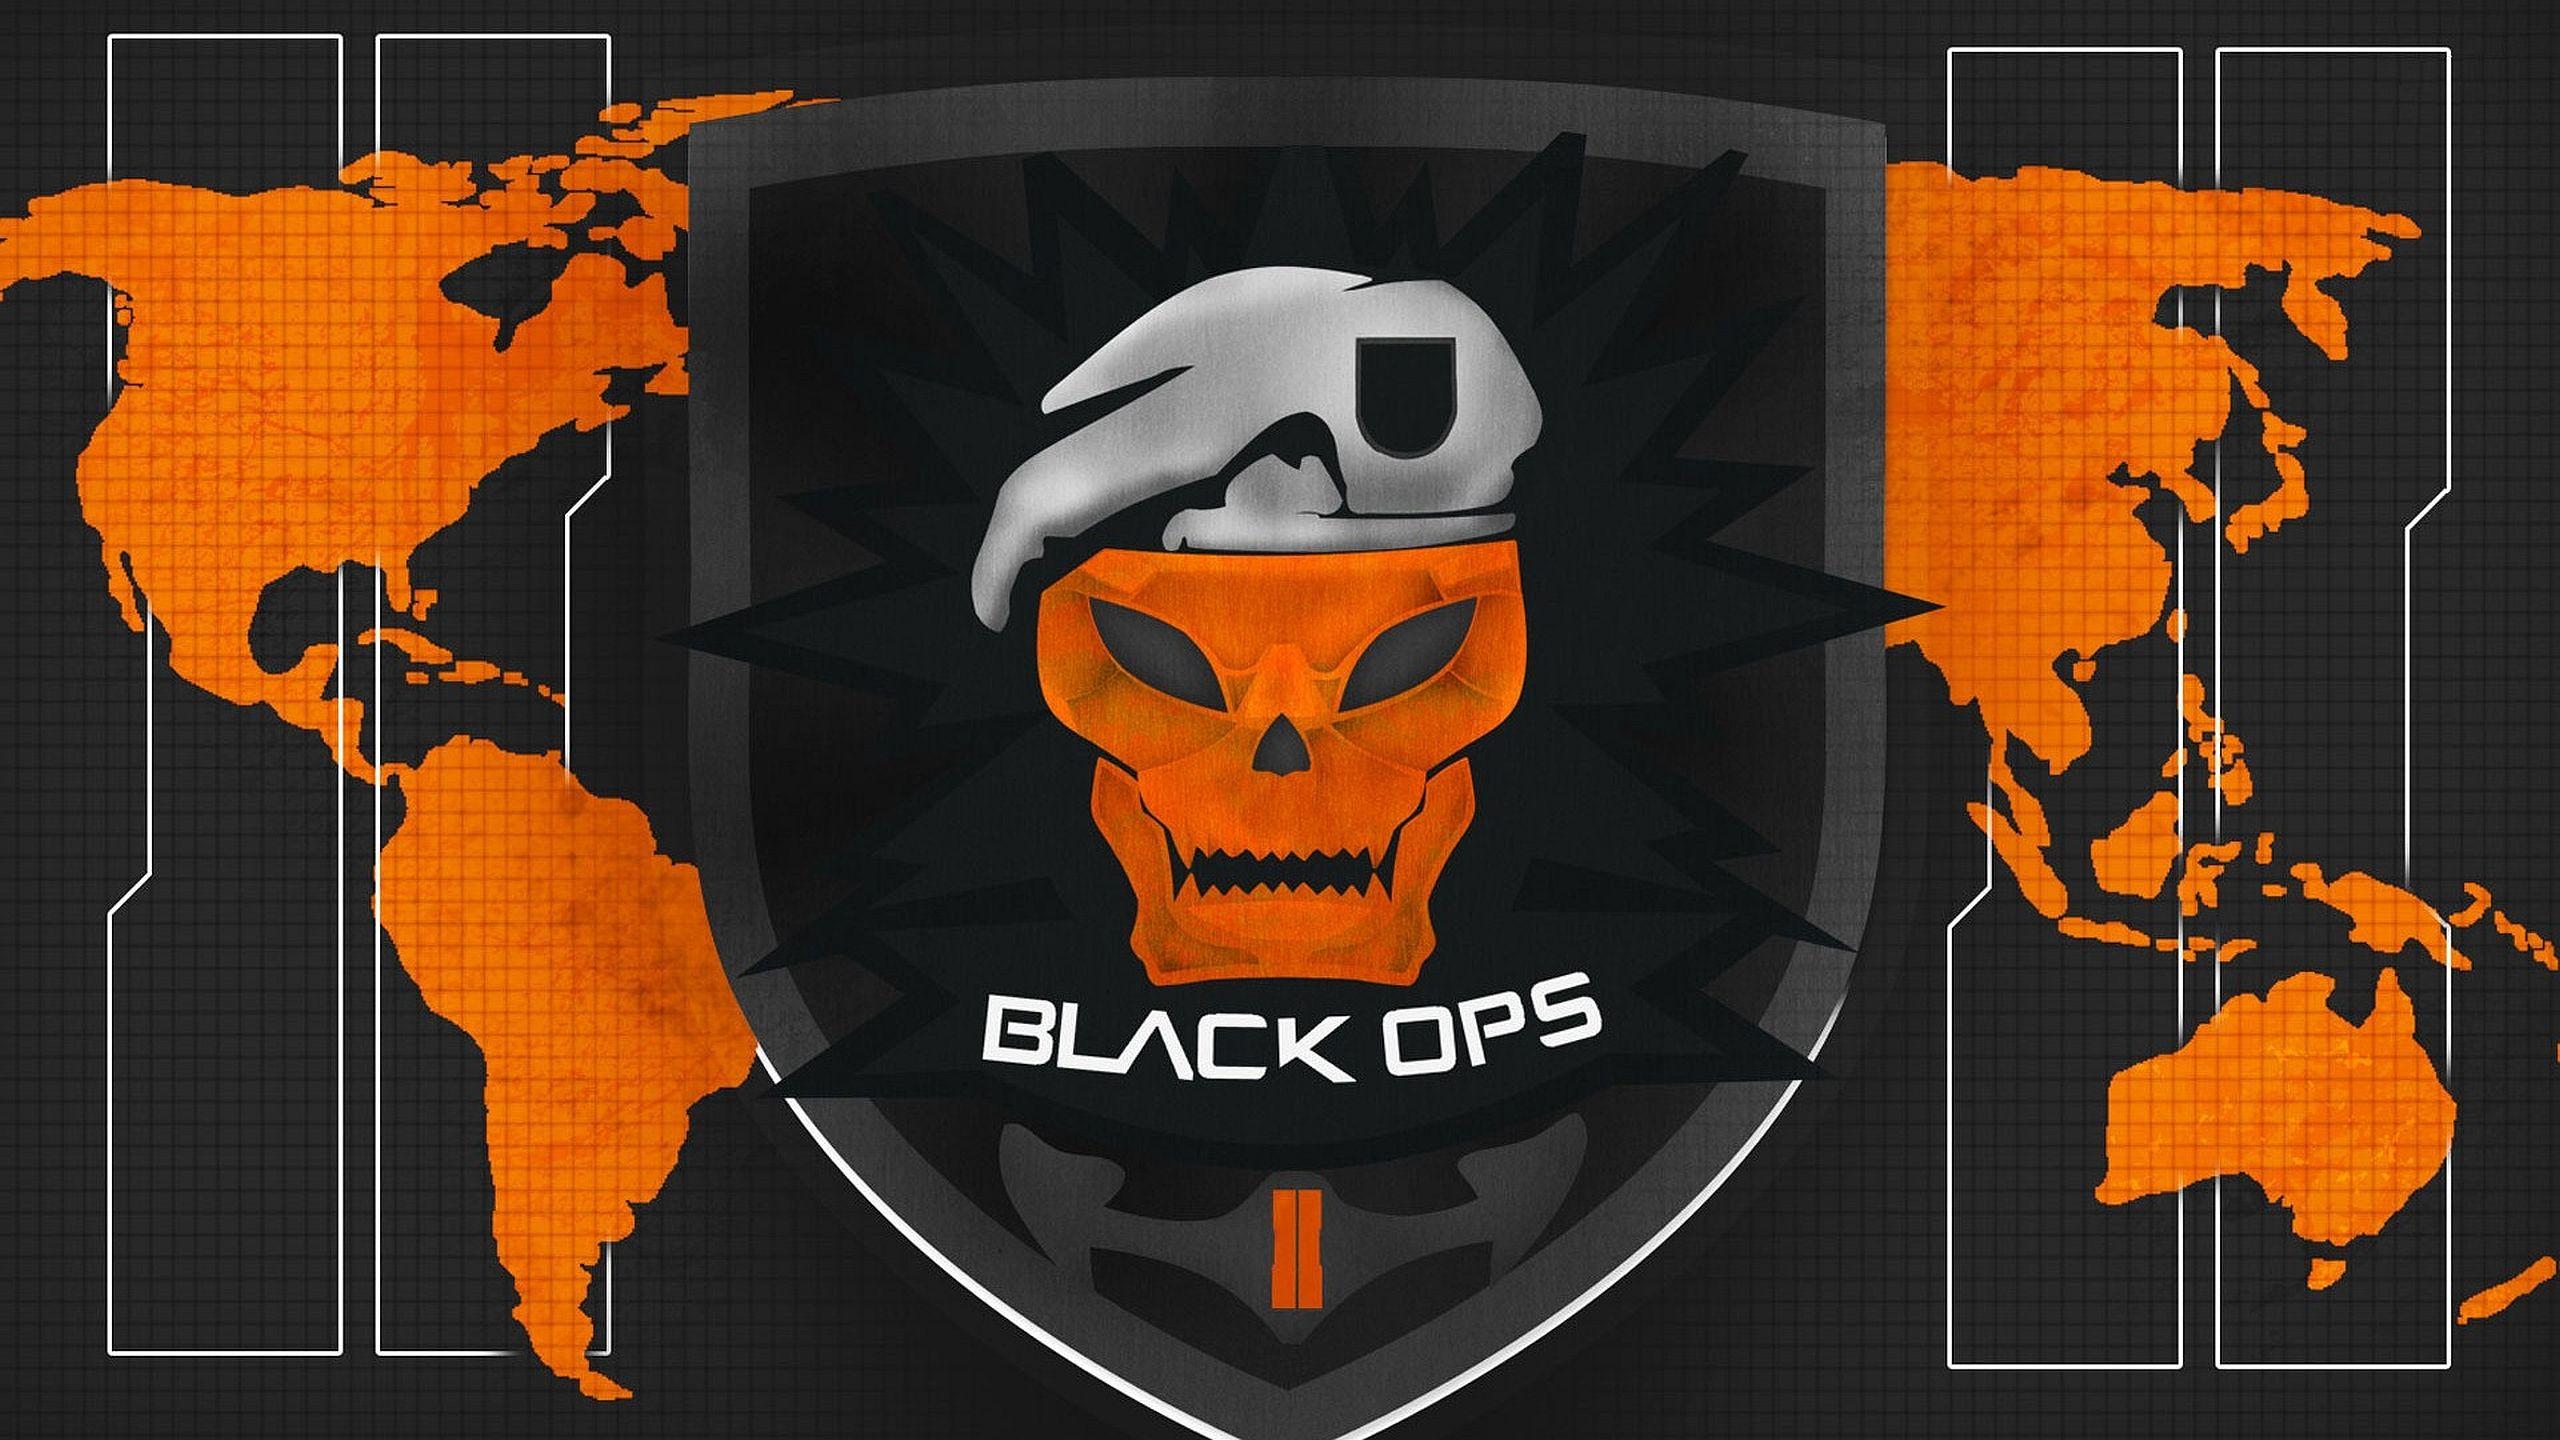 Call Of Duty: Black Ops HD Wallpaper